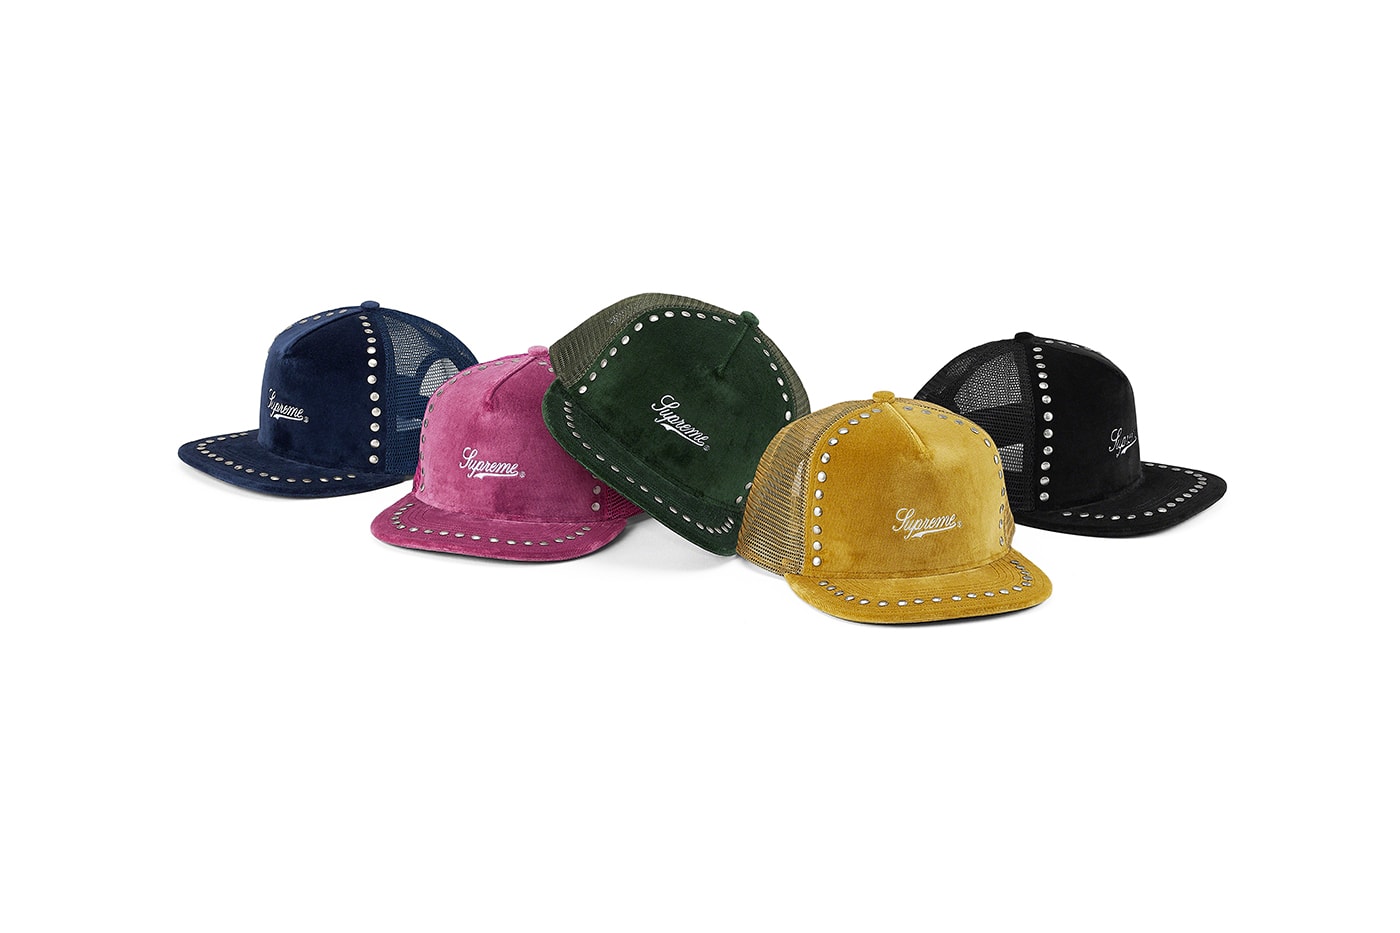 Supreme Fall/Winter 2021 Hats and Beanies skittles skrek Lady Pink kangol trapper hat trucker bucket hats 5-panels 